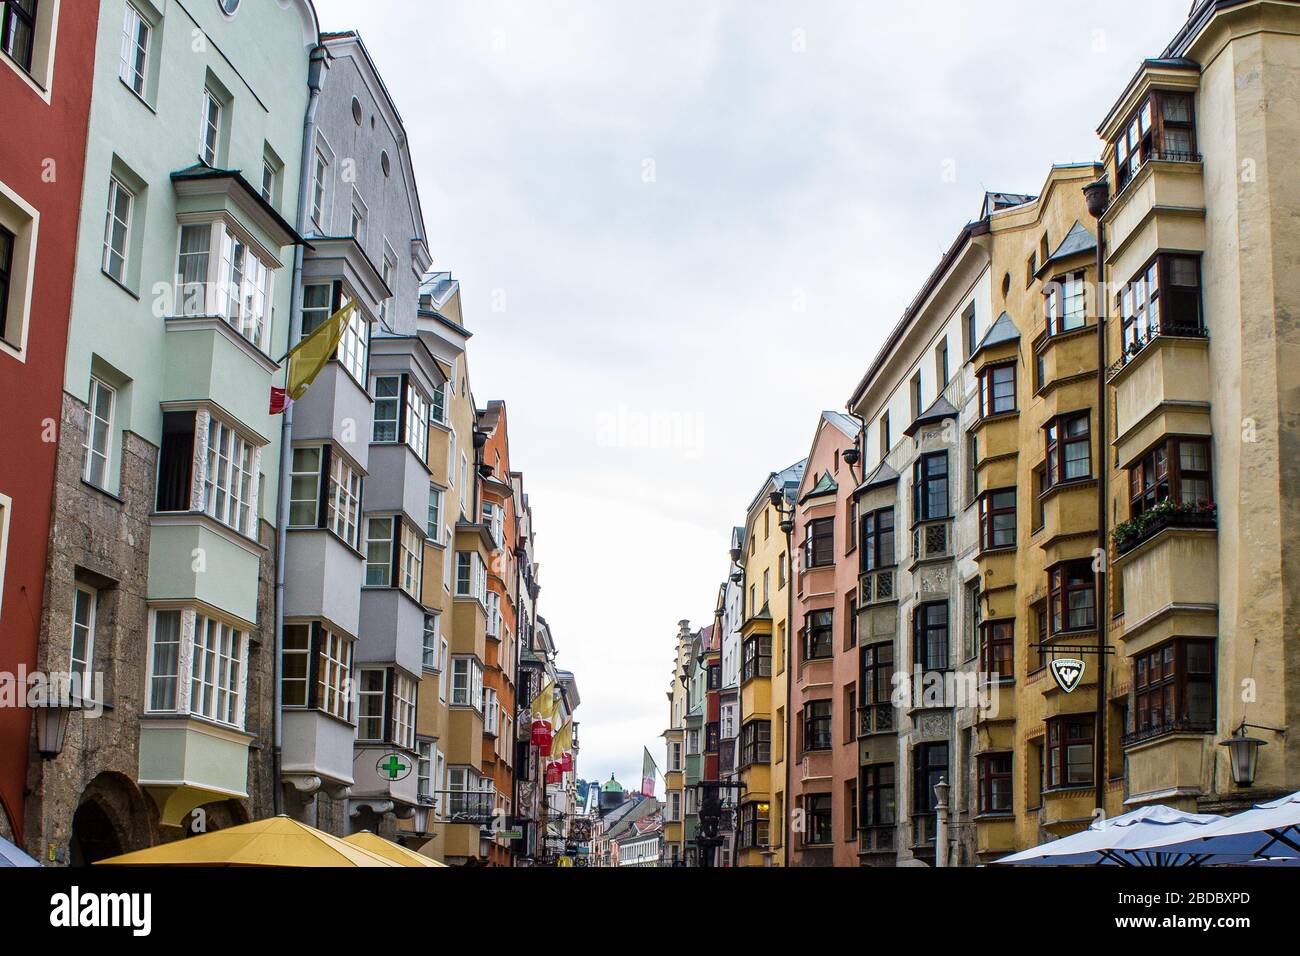 Innsbruck, Austria - August 12, 2019: Colorful Buildings in the City Center of Innsbruck, Austria. Stock Photo